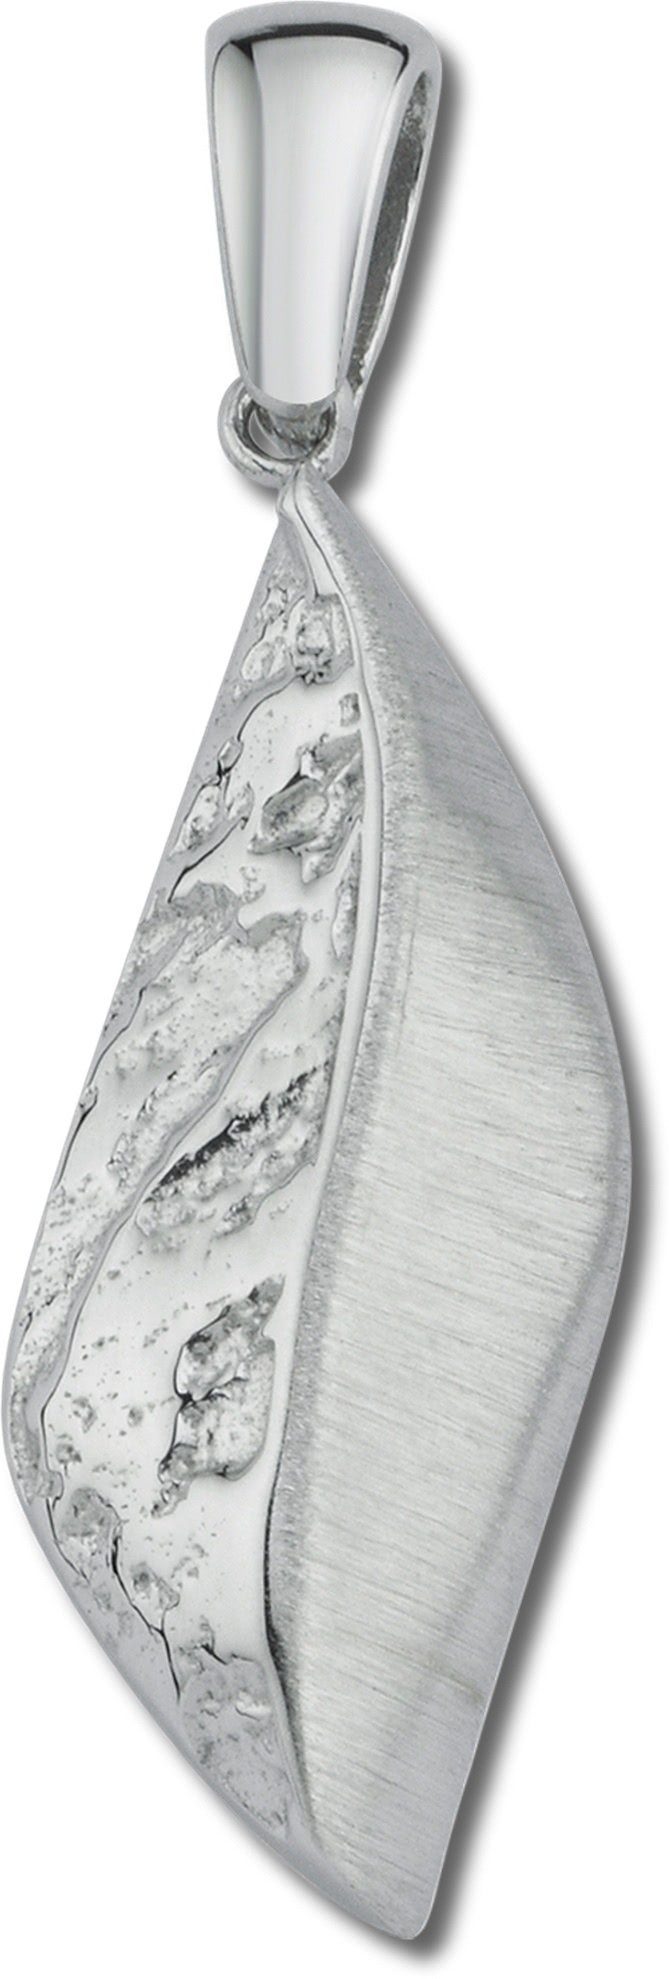 Balia Kettenanhänger Balia Damen Kettenanhänger 925 Silber, Kettenanhänger ca. 3,5cm, 925 Sterling Silber (Blatt)